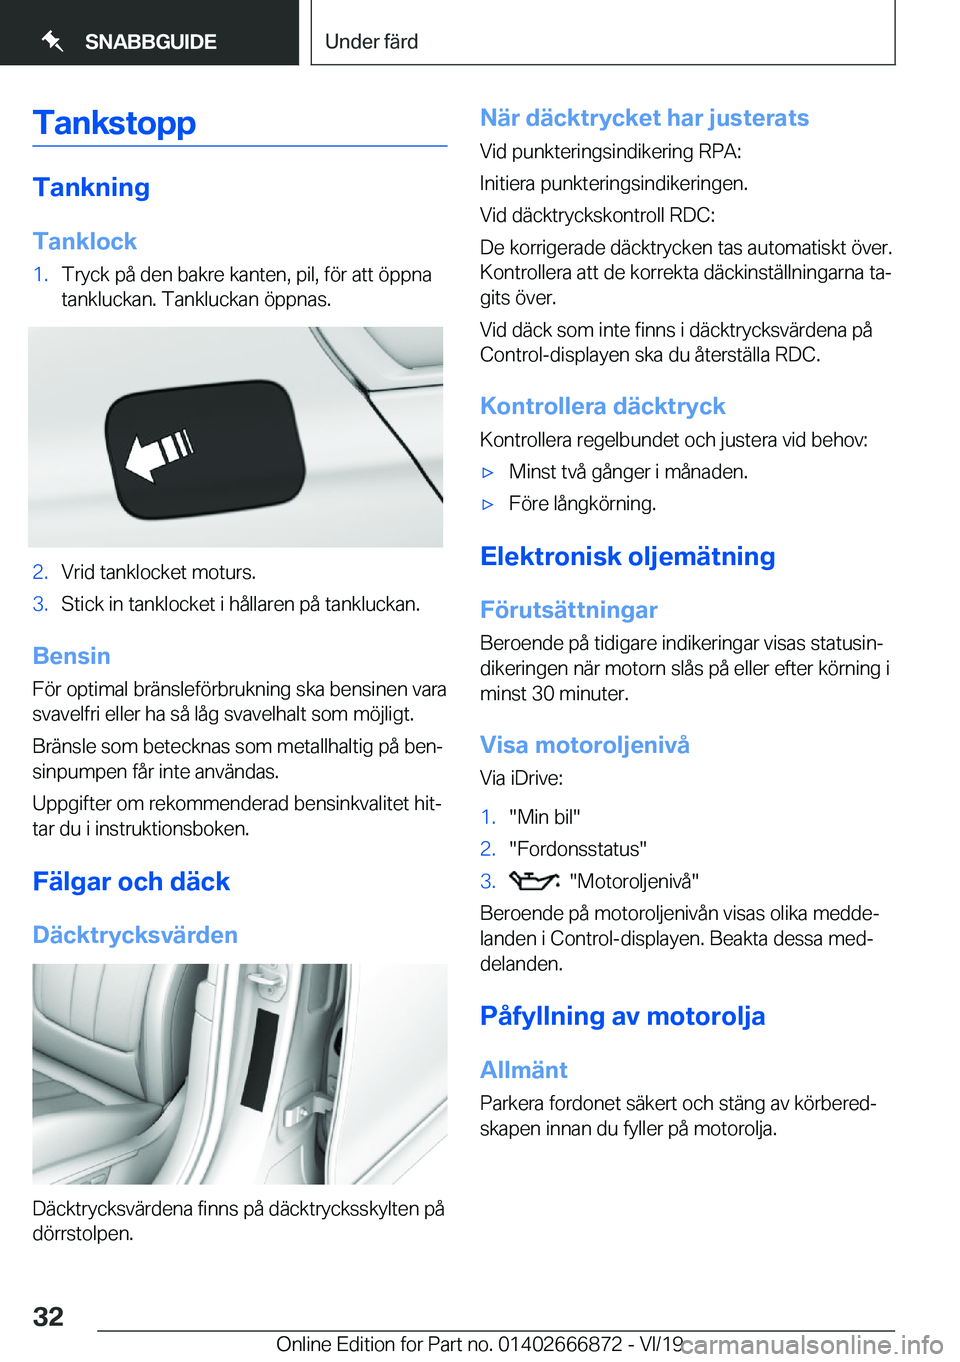 BMW X4 M 2020  InstruktionsbÖcker (in Swedish) �T�a�n�k�s�t�o�p�p
�T�a�n�k�n�i�n�g
�T�a�n�k�l�o�c�k
�1�.�T�r�y�c�k��p�å��d�e�n��b�a�k�r�e��k�a�n�t�e�n�,��p�i�l�,��f�